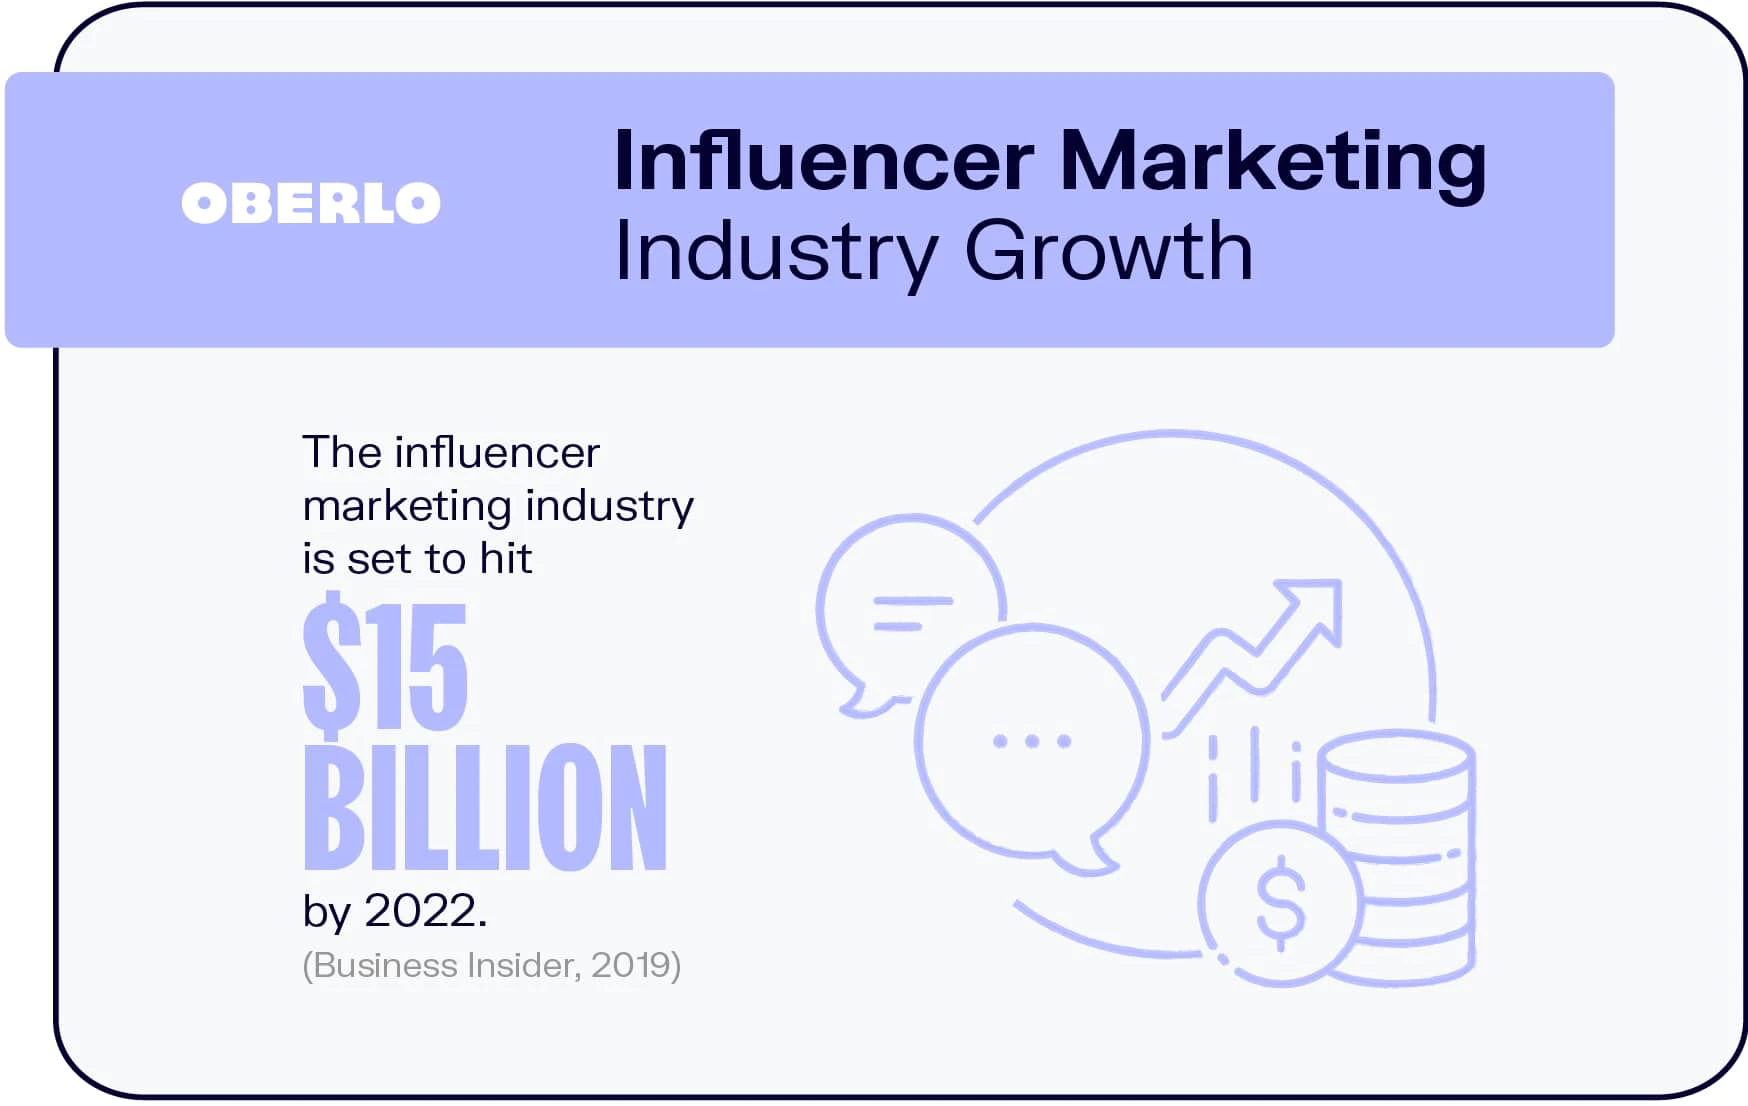 Oberlo image on Influencer Marketing Growth